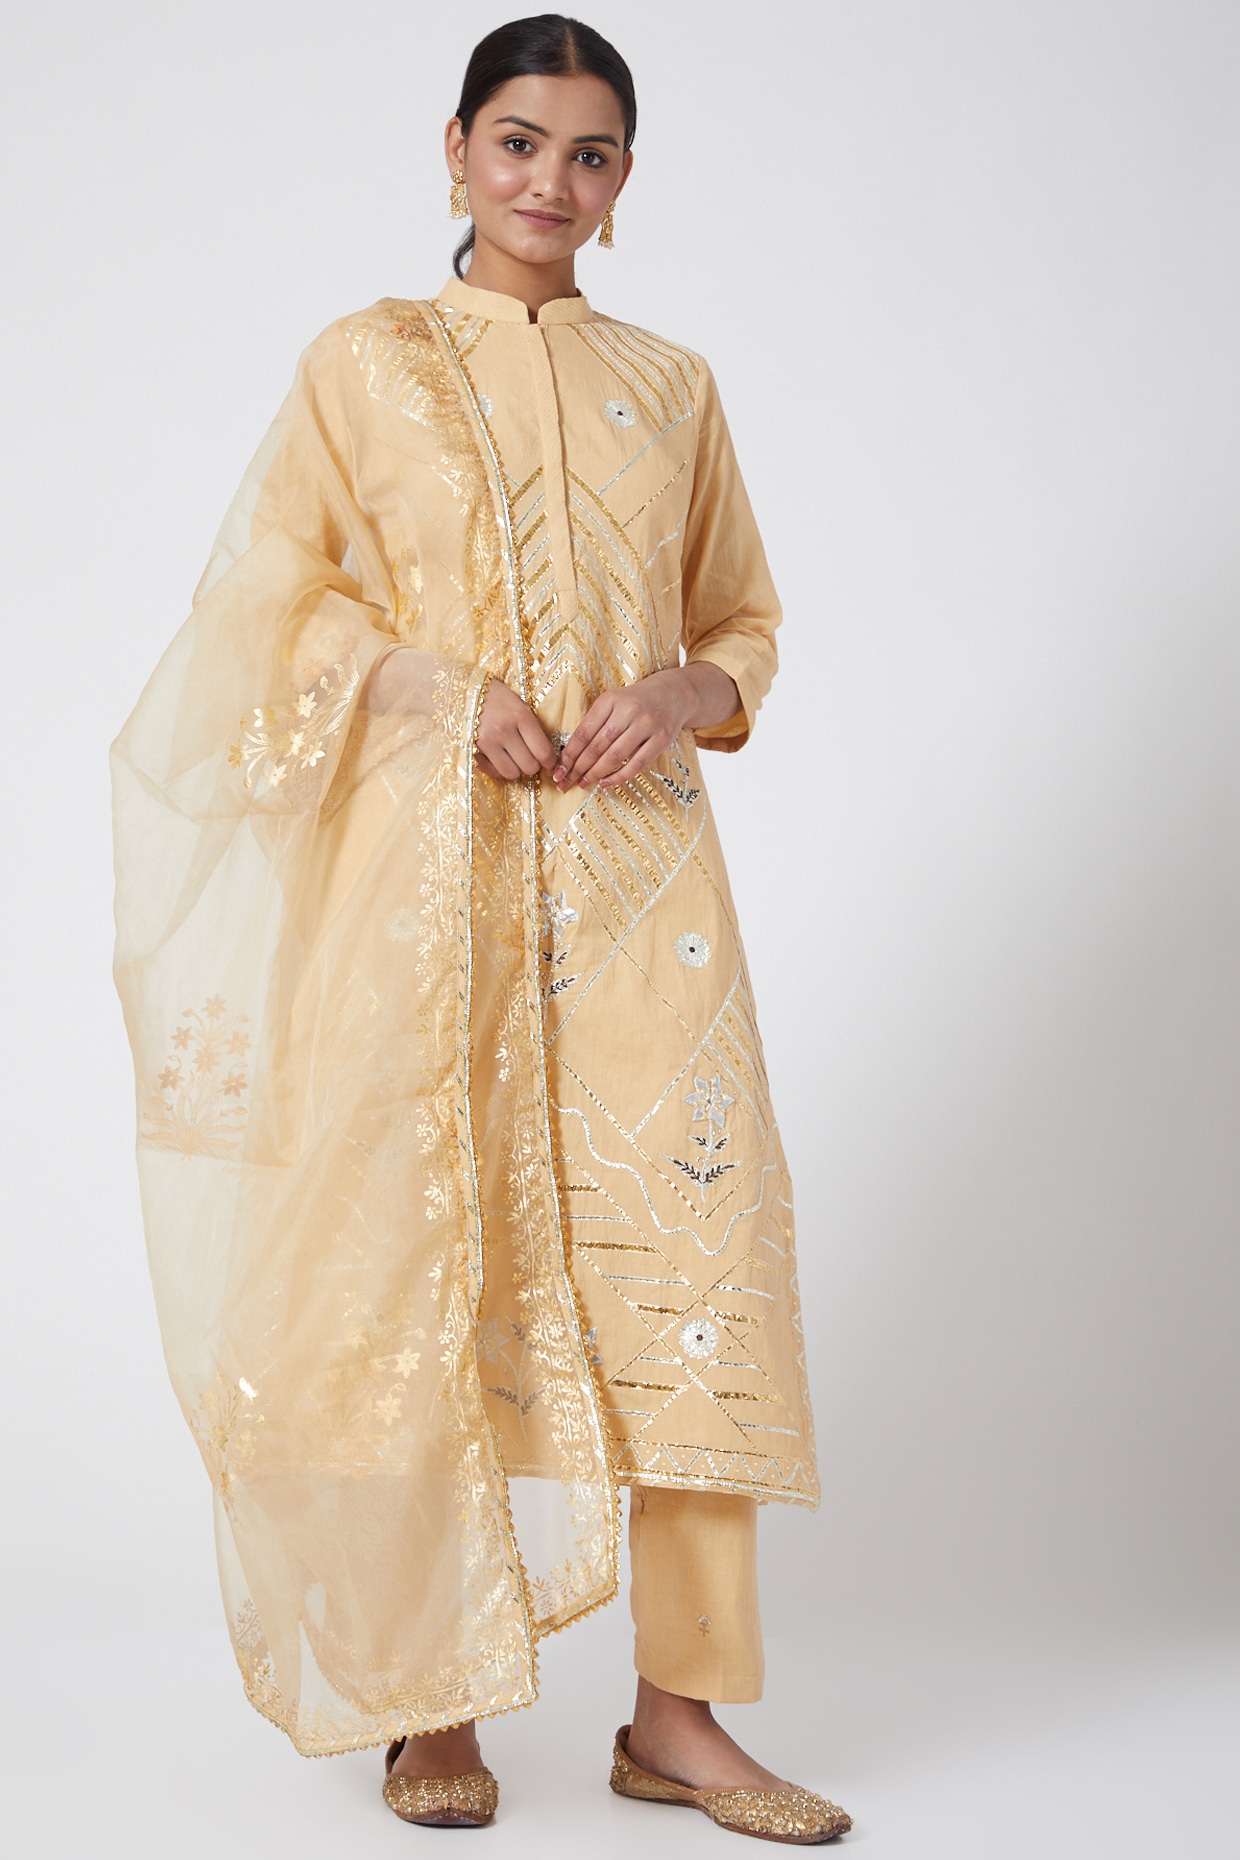 Buy Manya Fashion Rayon Silk Kurti with Golden Print Colour Cream (Size =  XL) at Amazon.in